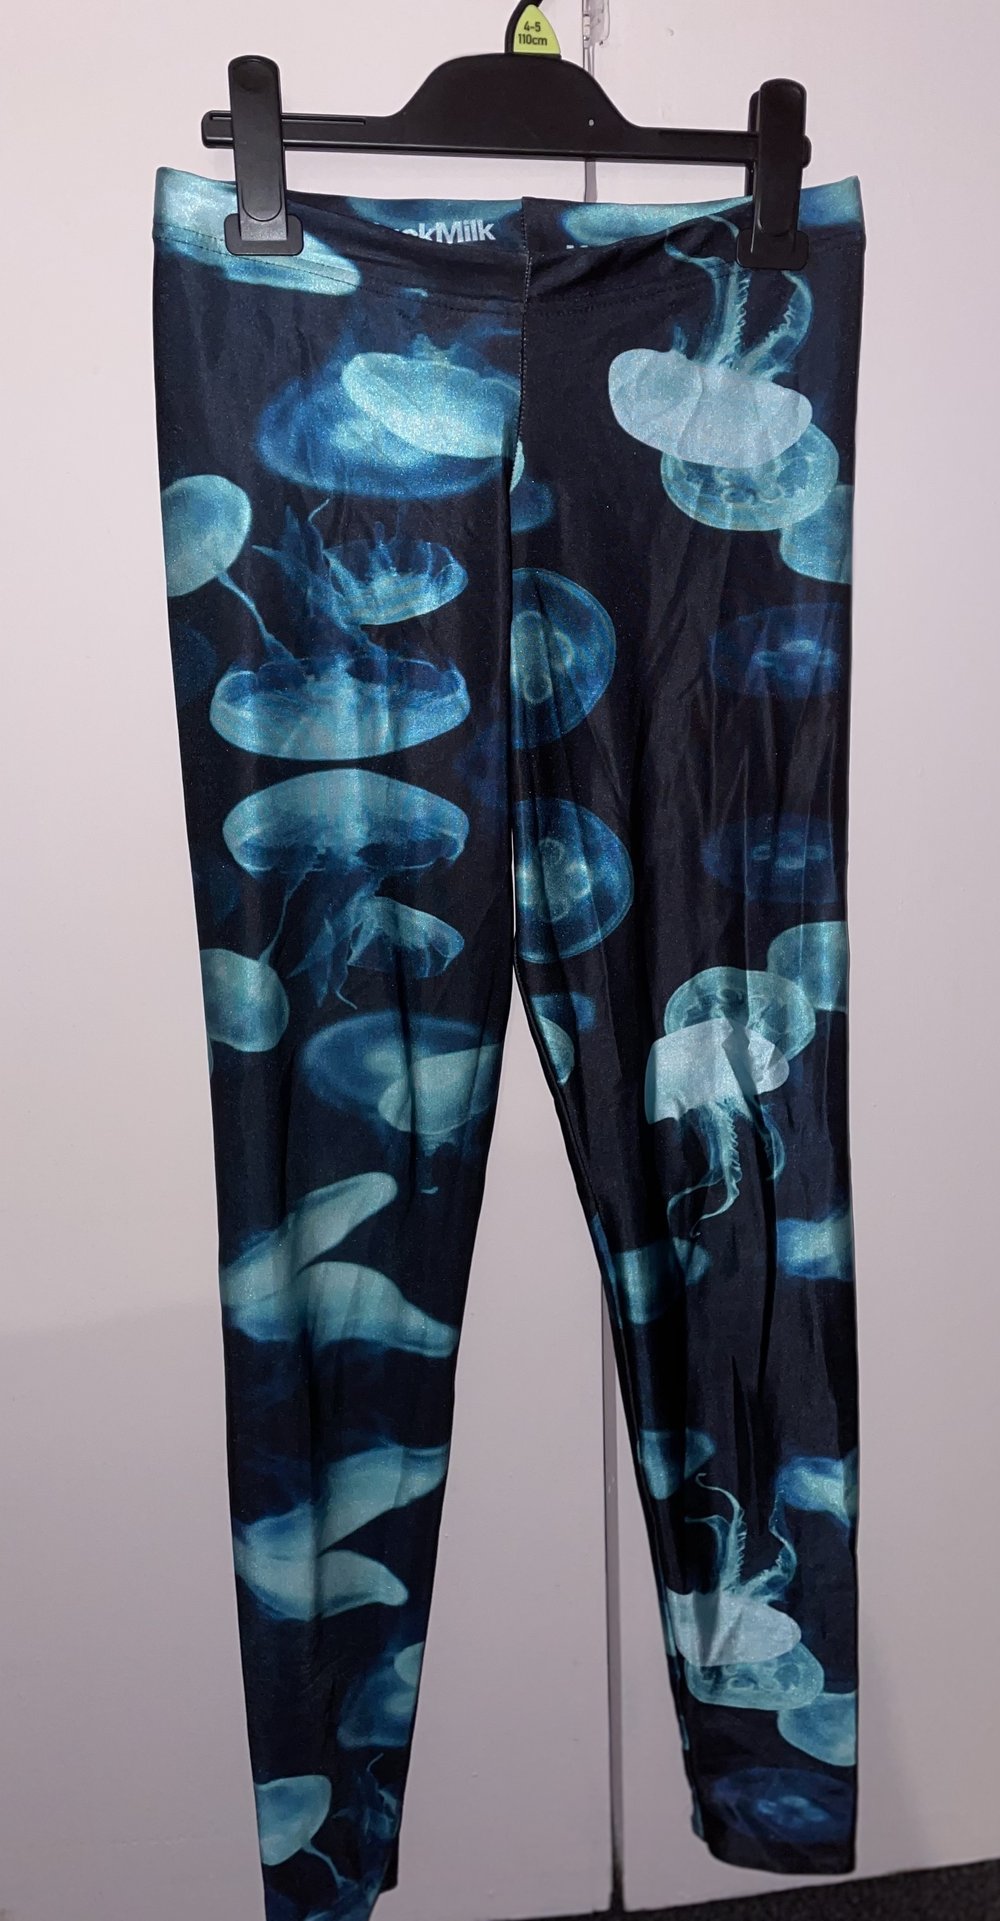 Black Milk Clothing - Jellyfish Leggings